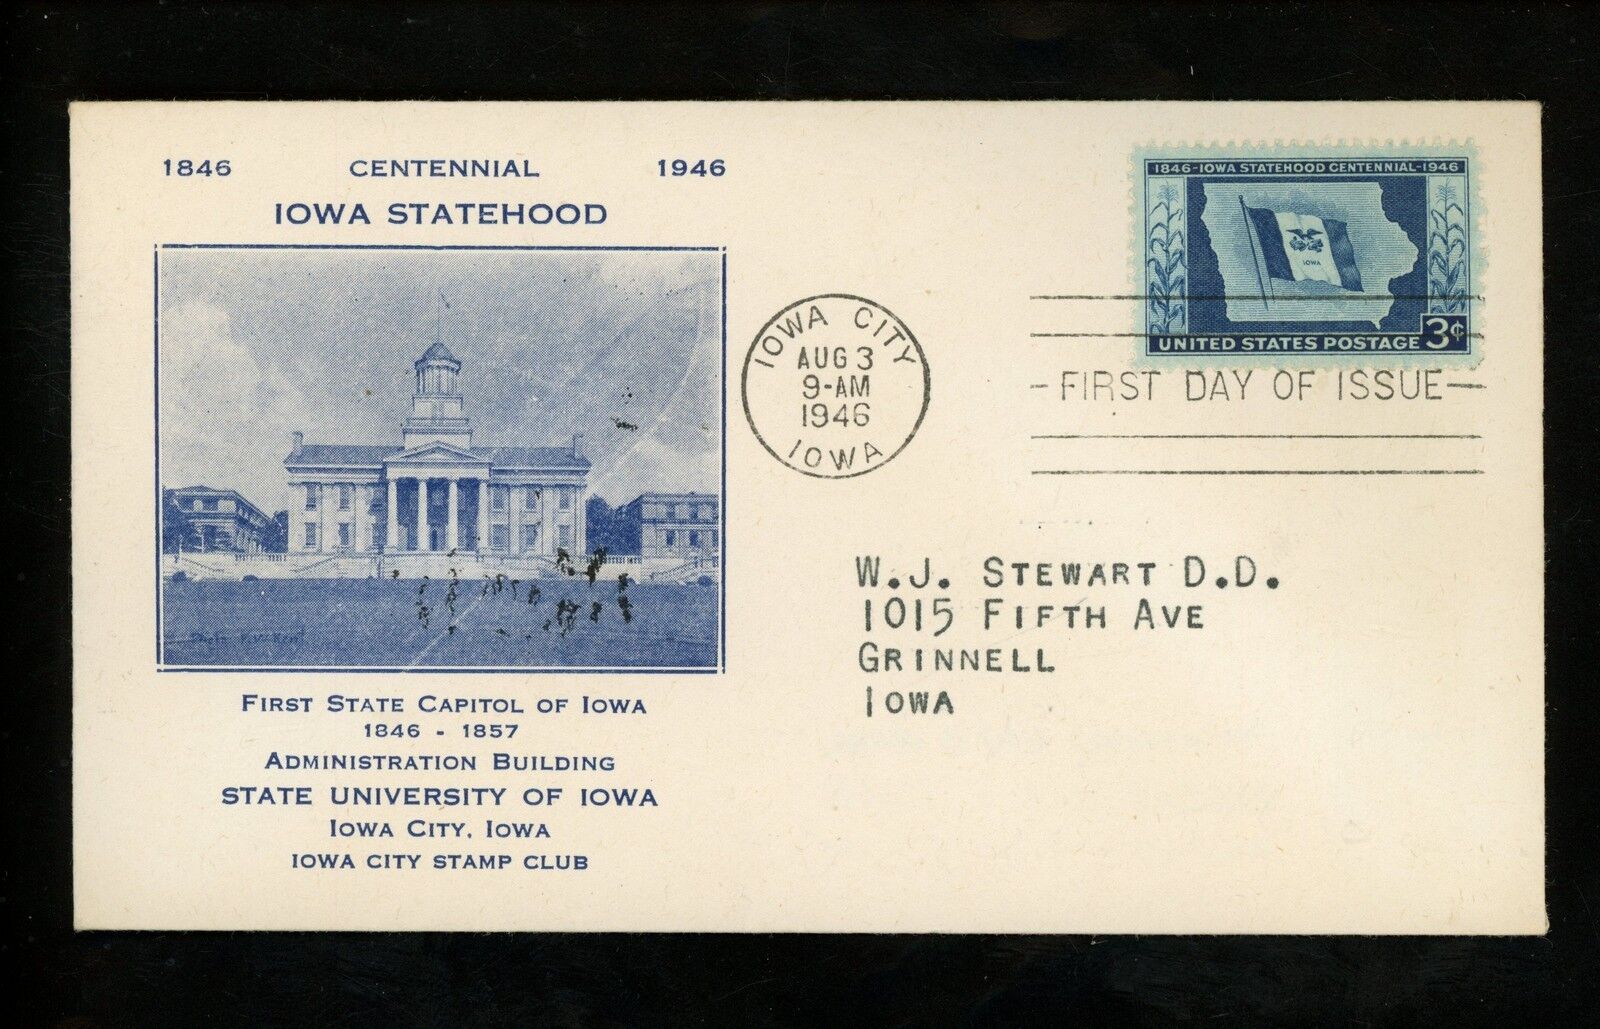 US FDC Miami Mall #942 Iowa City Stamp Club Cen 1946 M-24 Excellence IA Statehood